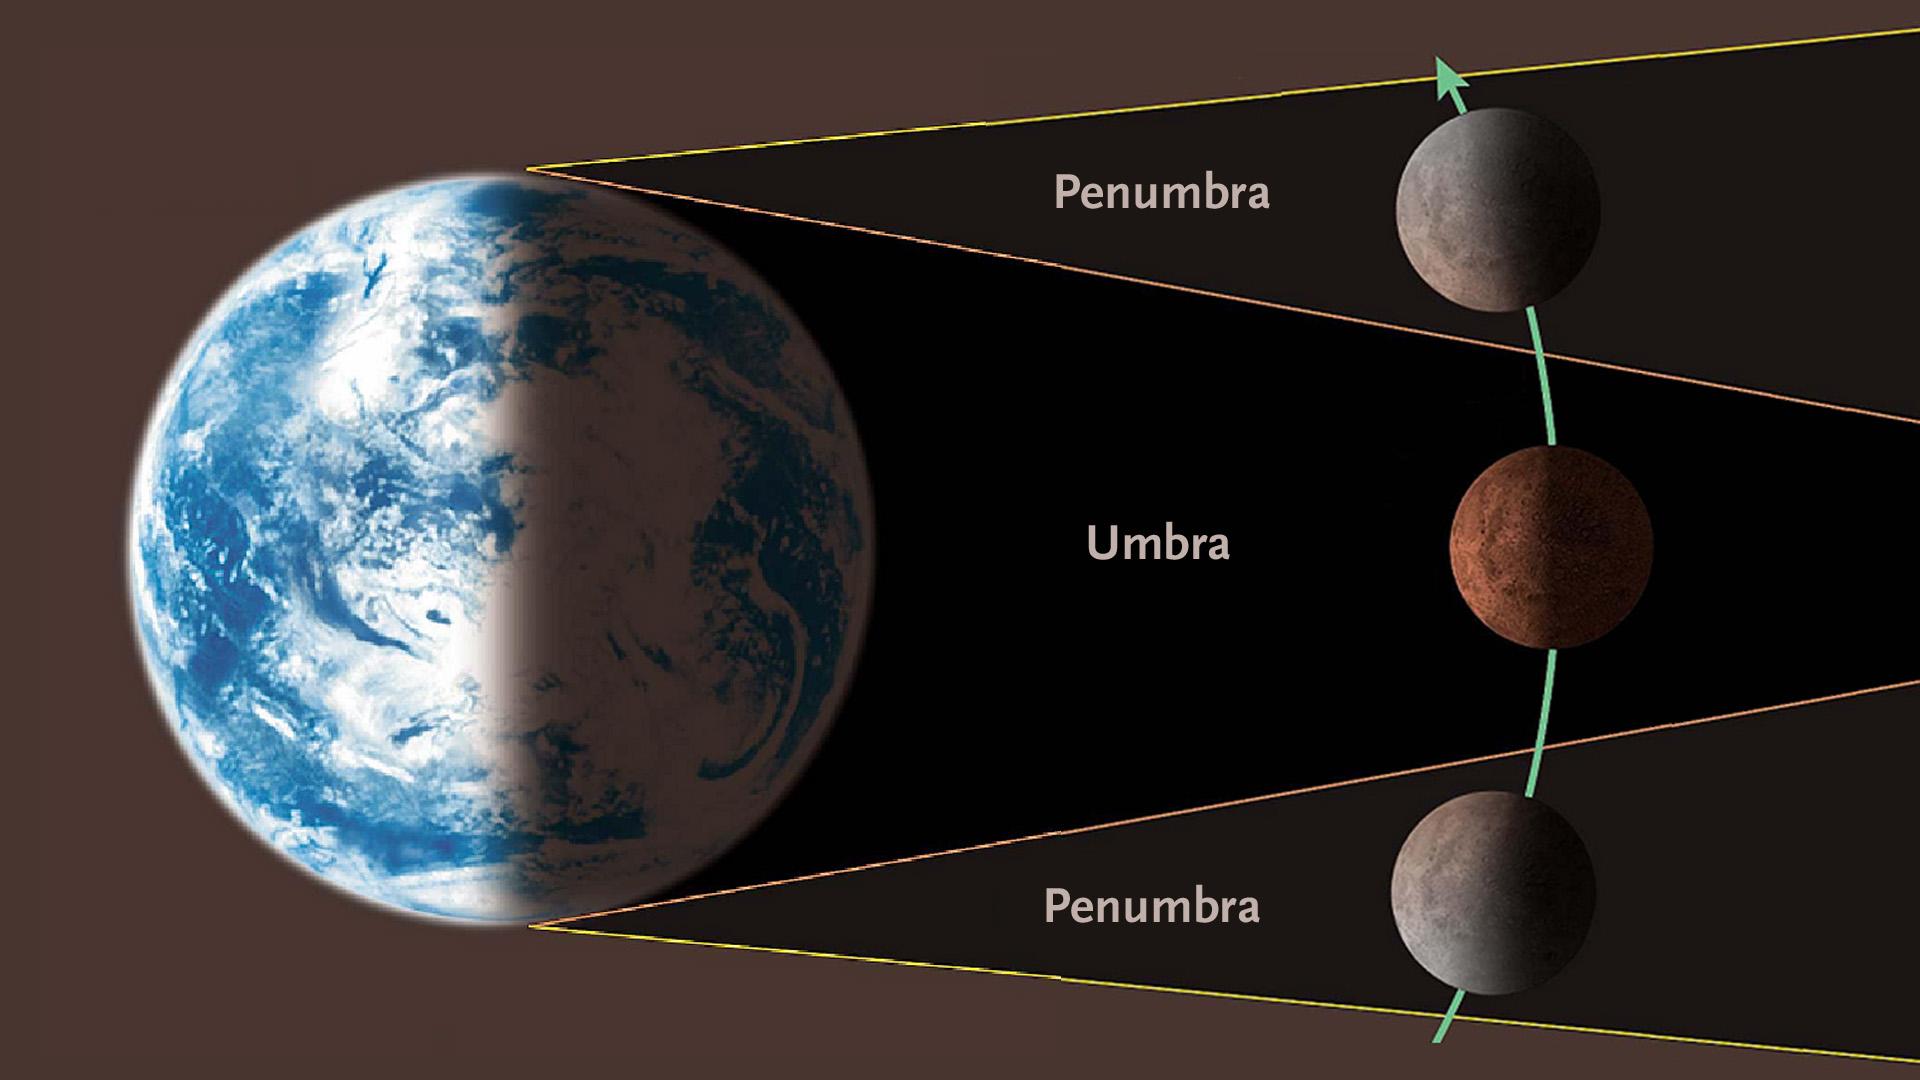 Friday Night's Deep Penumbral Lunar Eclipse & Telescope